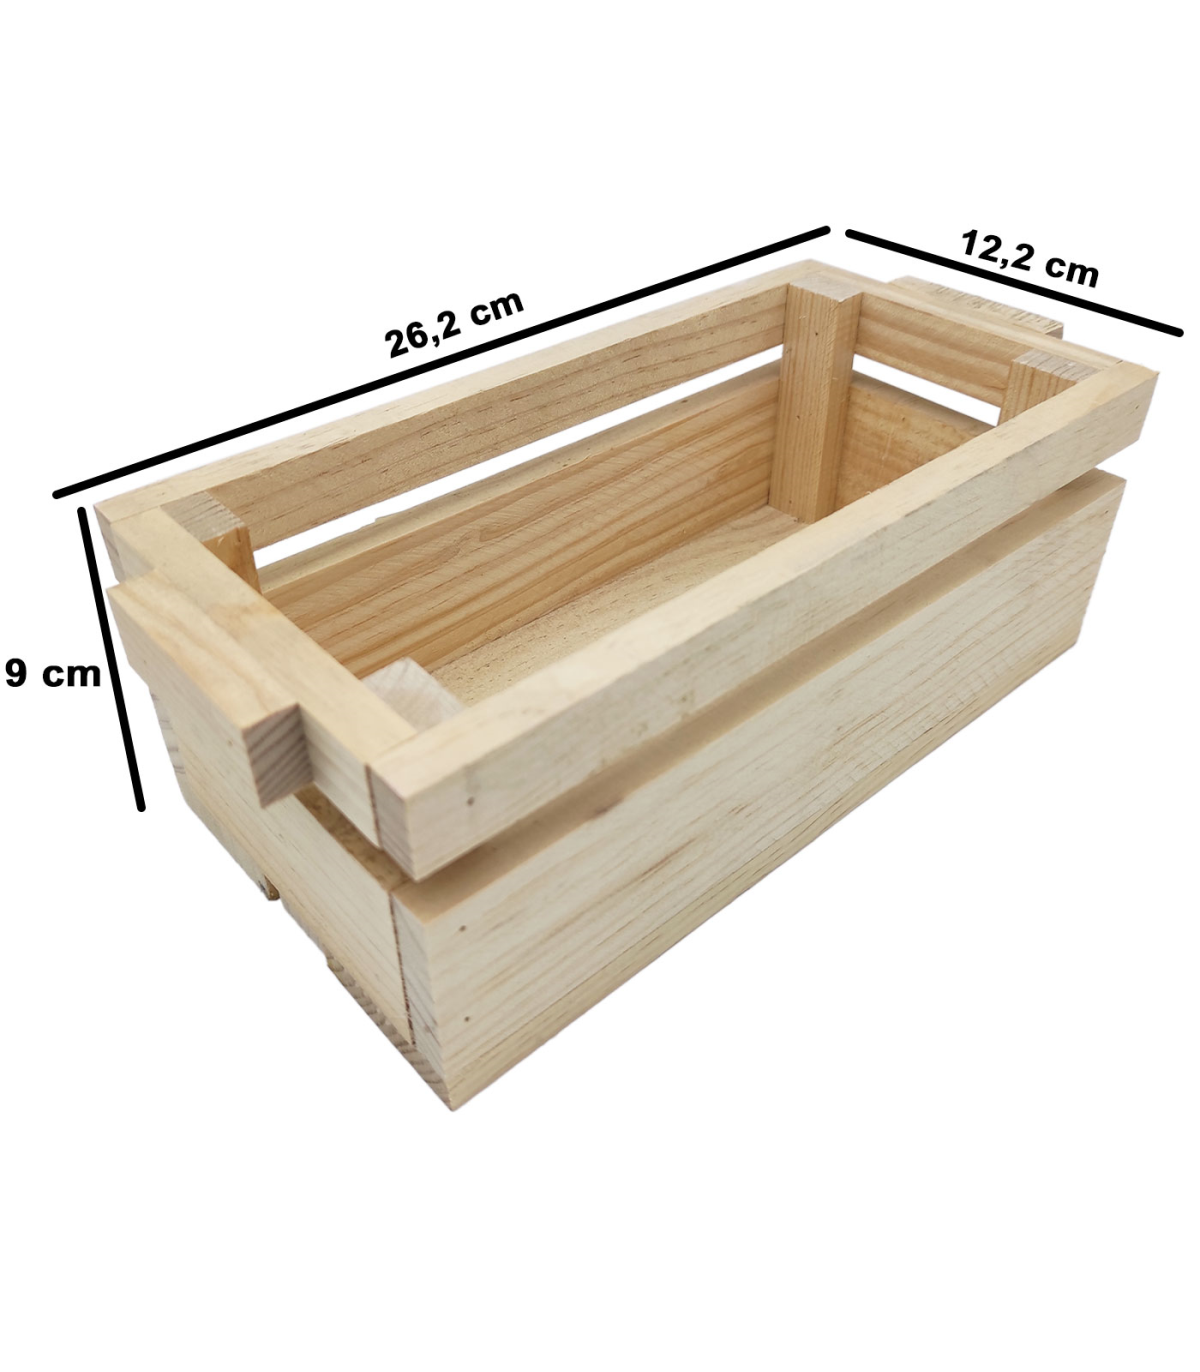 Set de 2 cajas de madera con asas, recipientes multiusos rectangulares,  almacenaje de herramientas, accesorios de pi